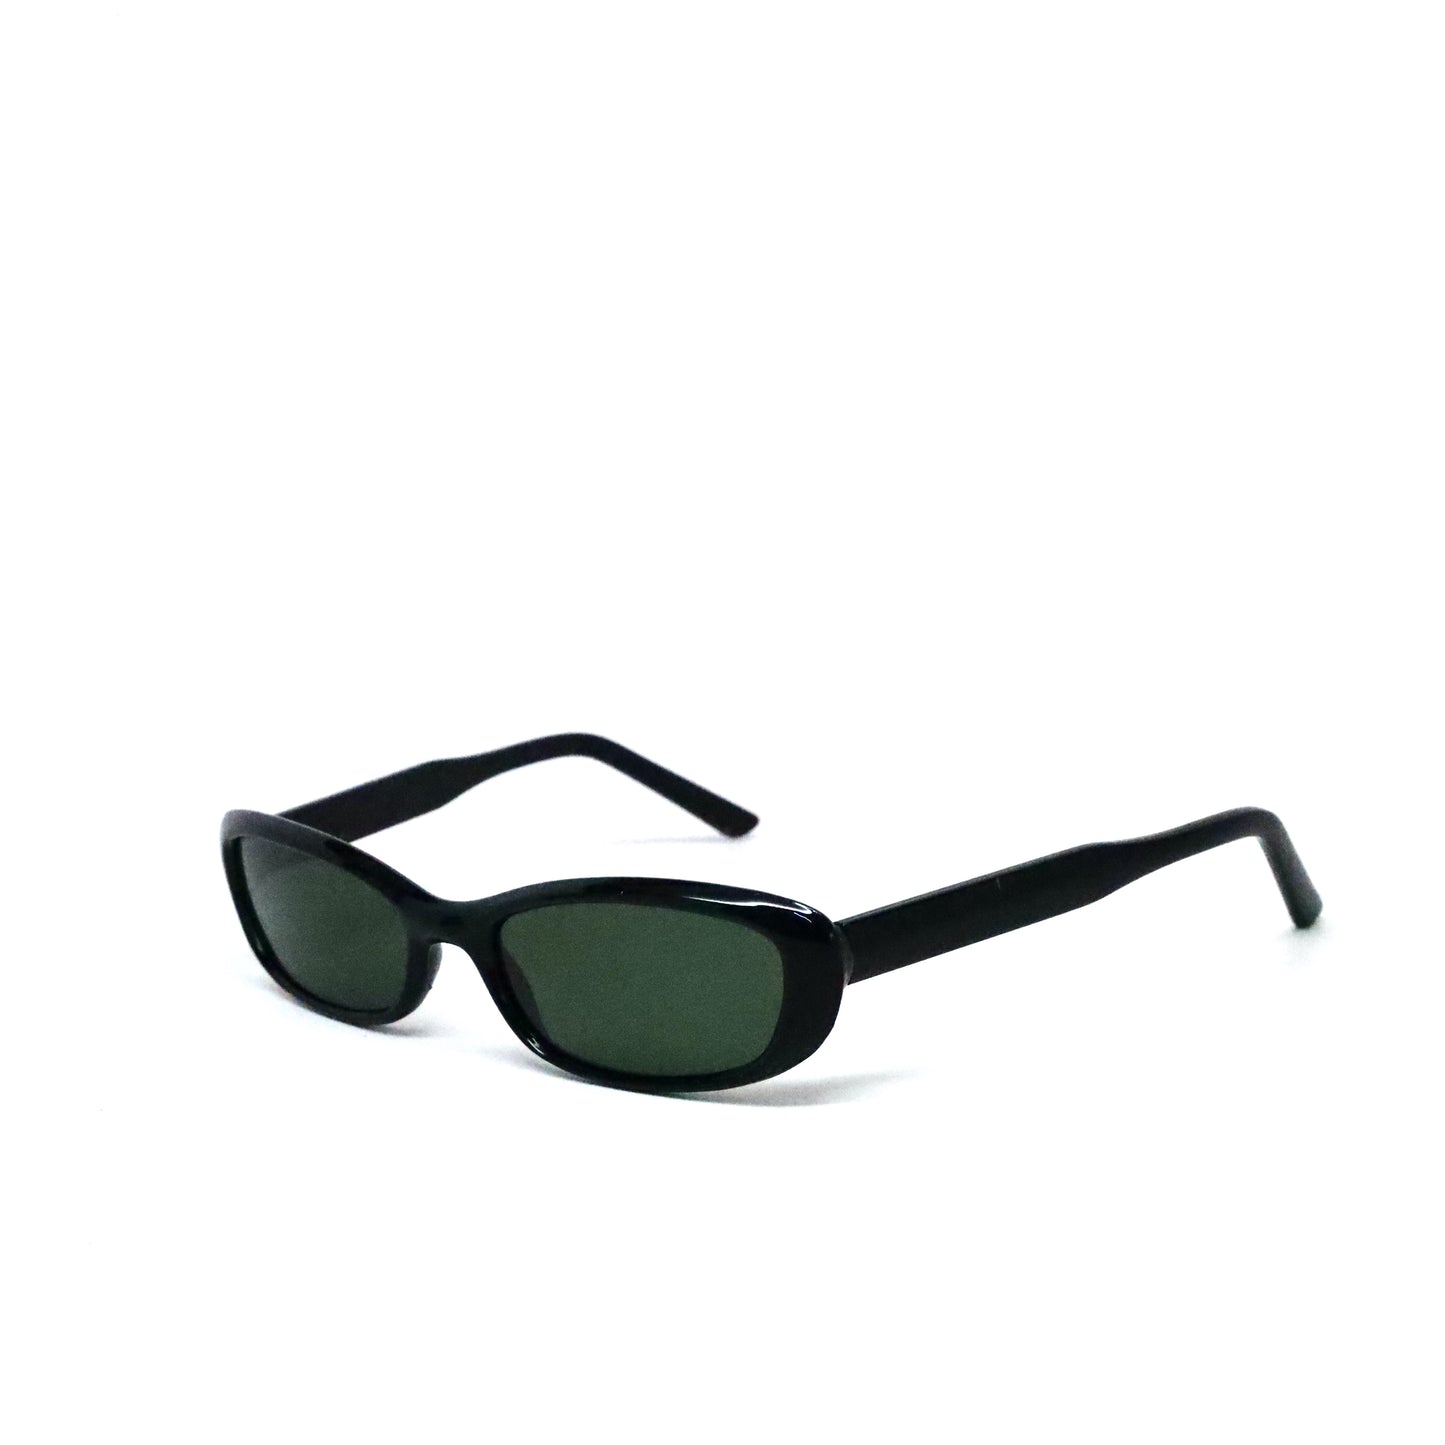 Vintage 90s Small Size Slim Narrow Rectangle Frame Sunglasses - Black